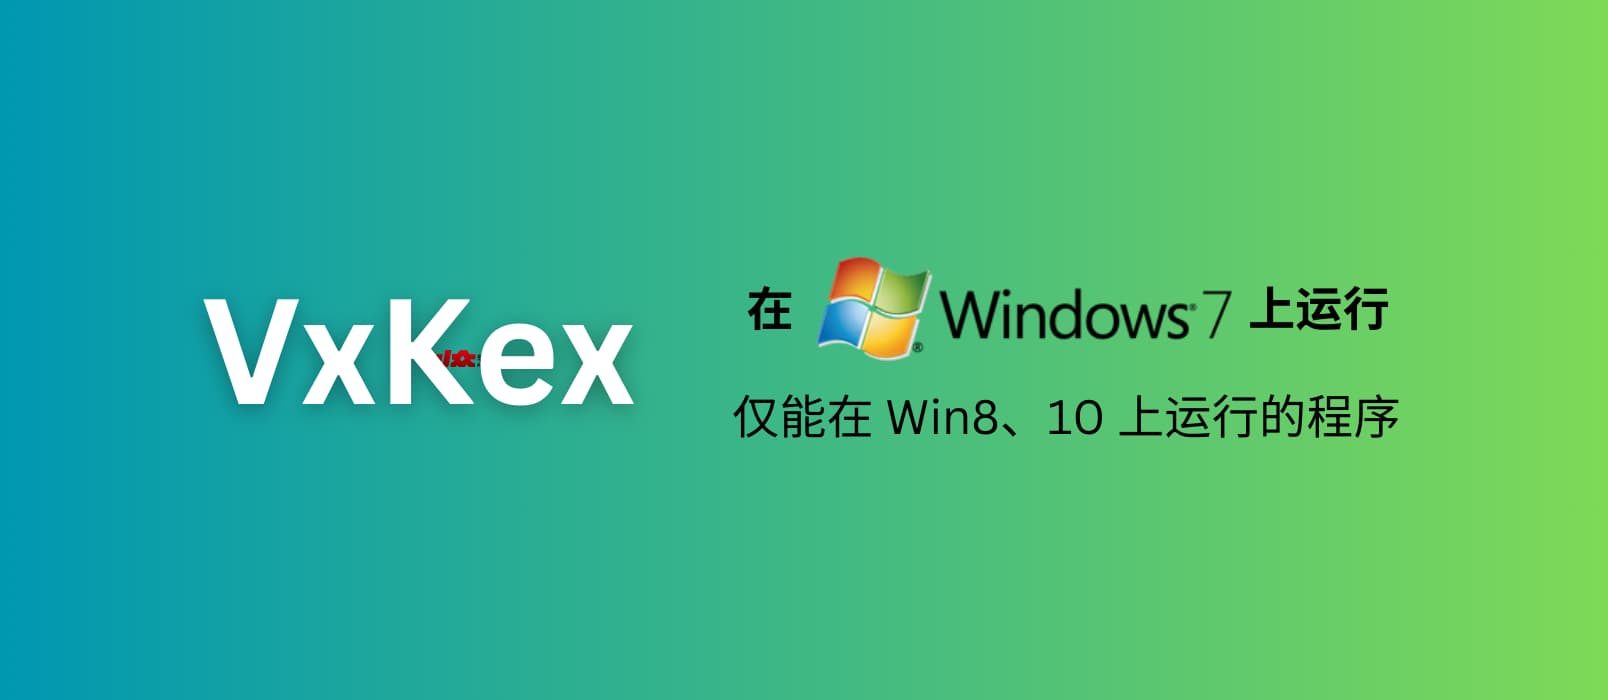 VxKex - 让 Windows 7 系统支持仅能在 Win8、10 上运行的程序，包括 Chromium、MPV、Python、VSCode 等